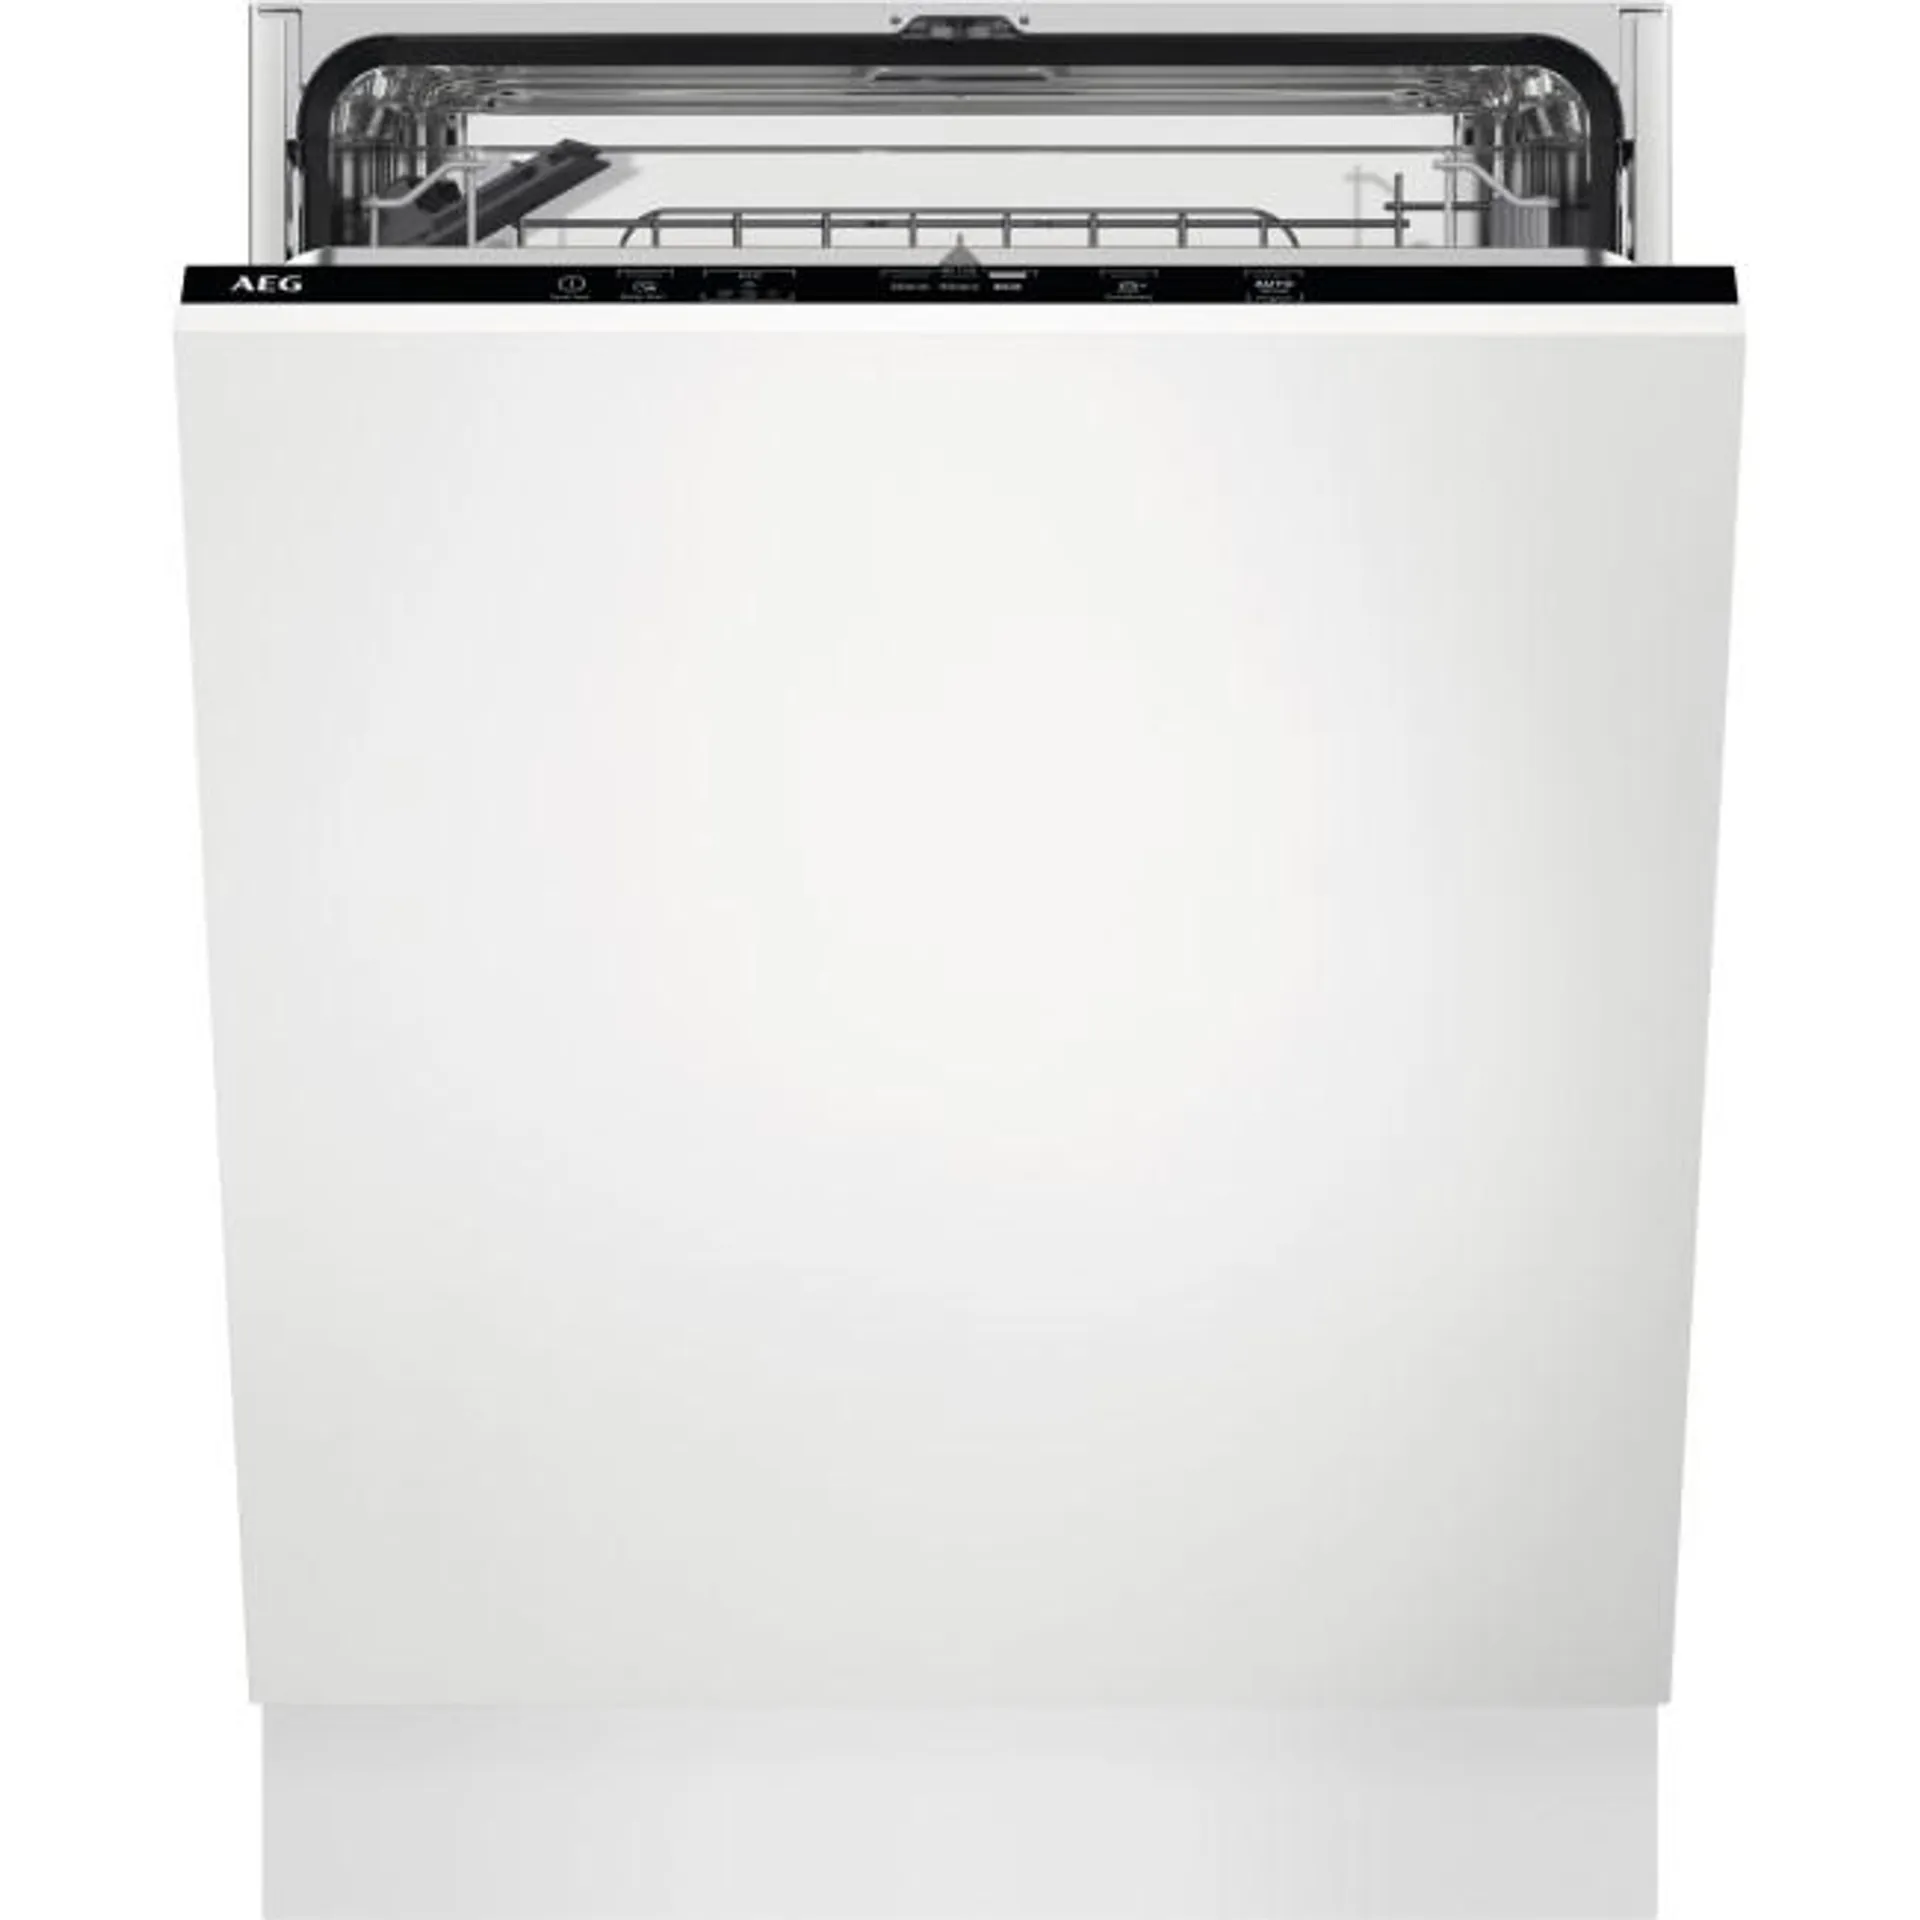 AEG 13 Place Settings Fully Integrated Dishwasher